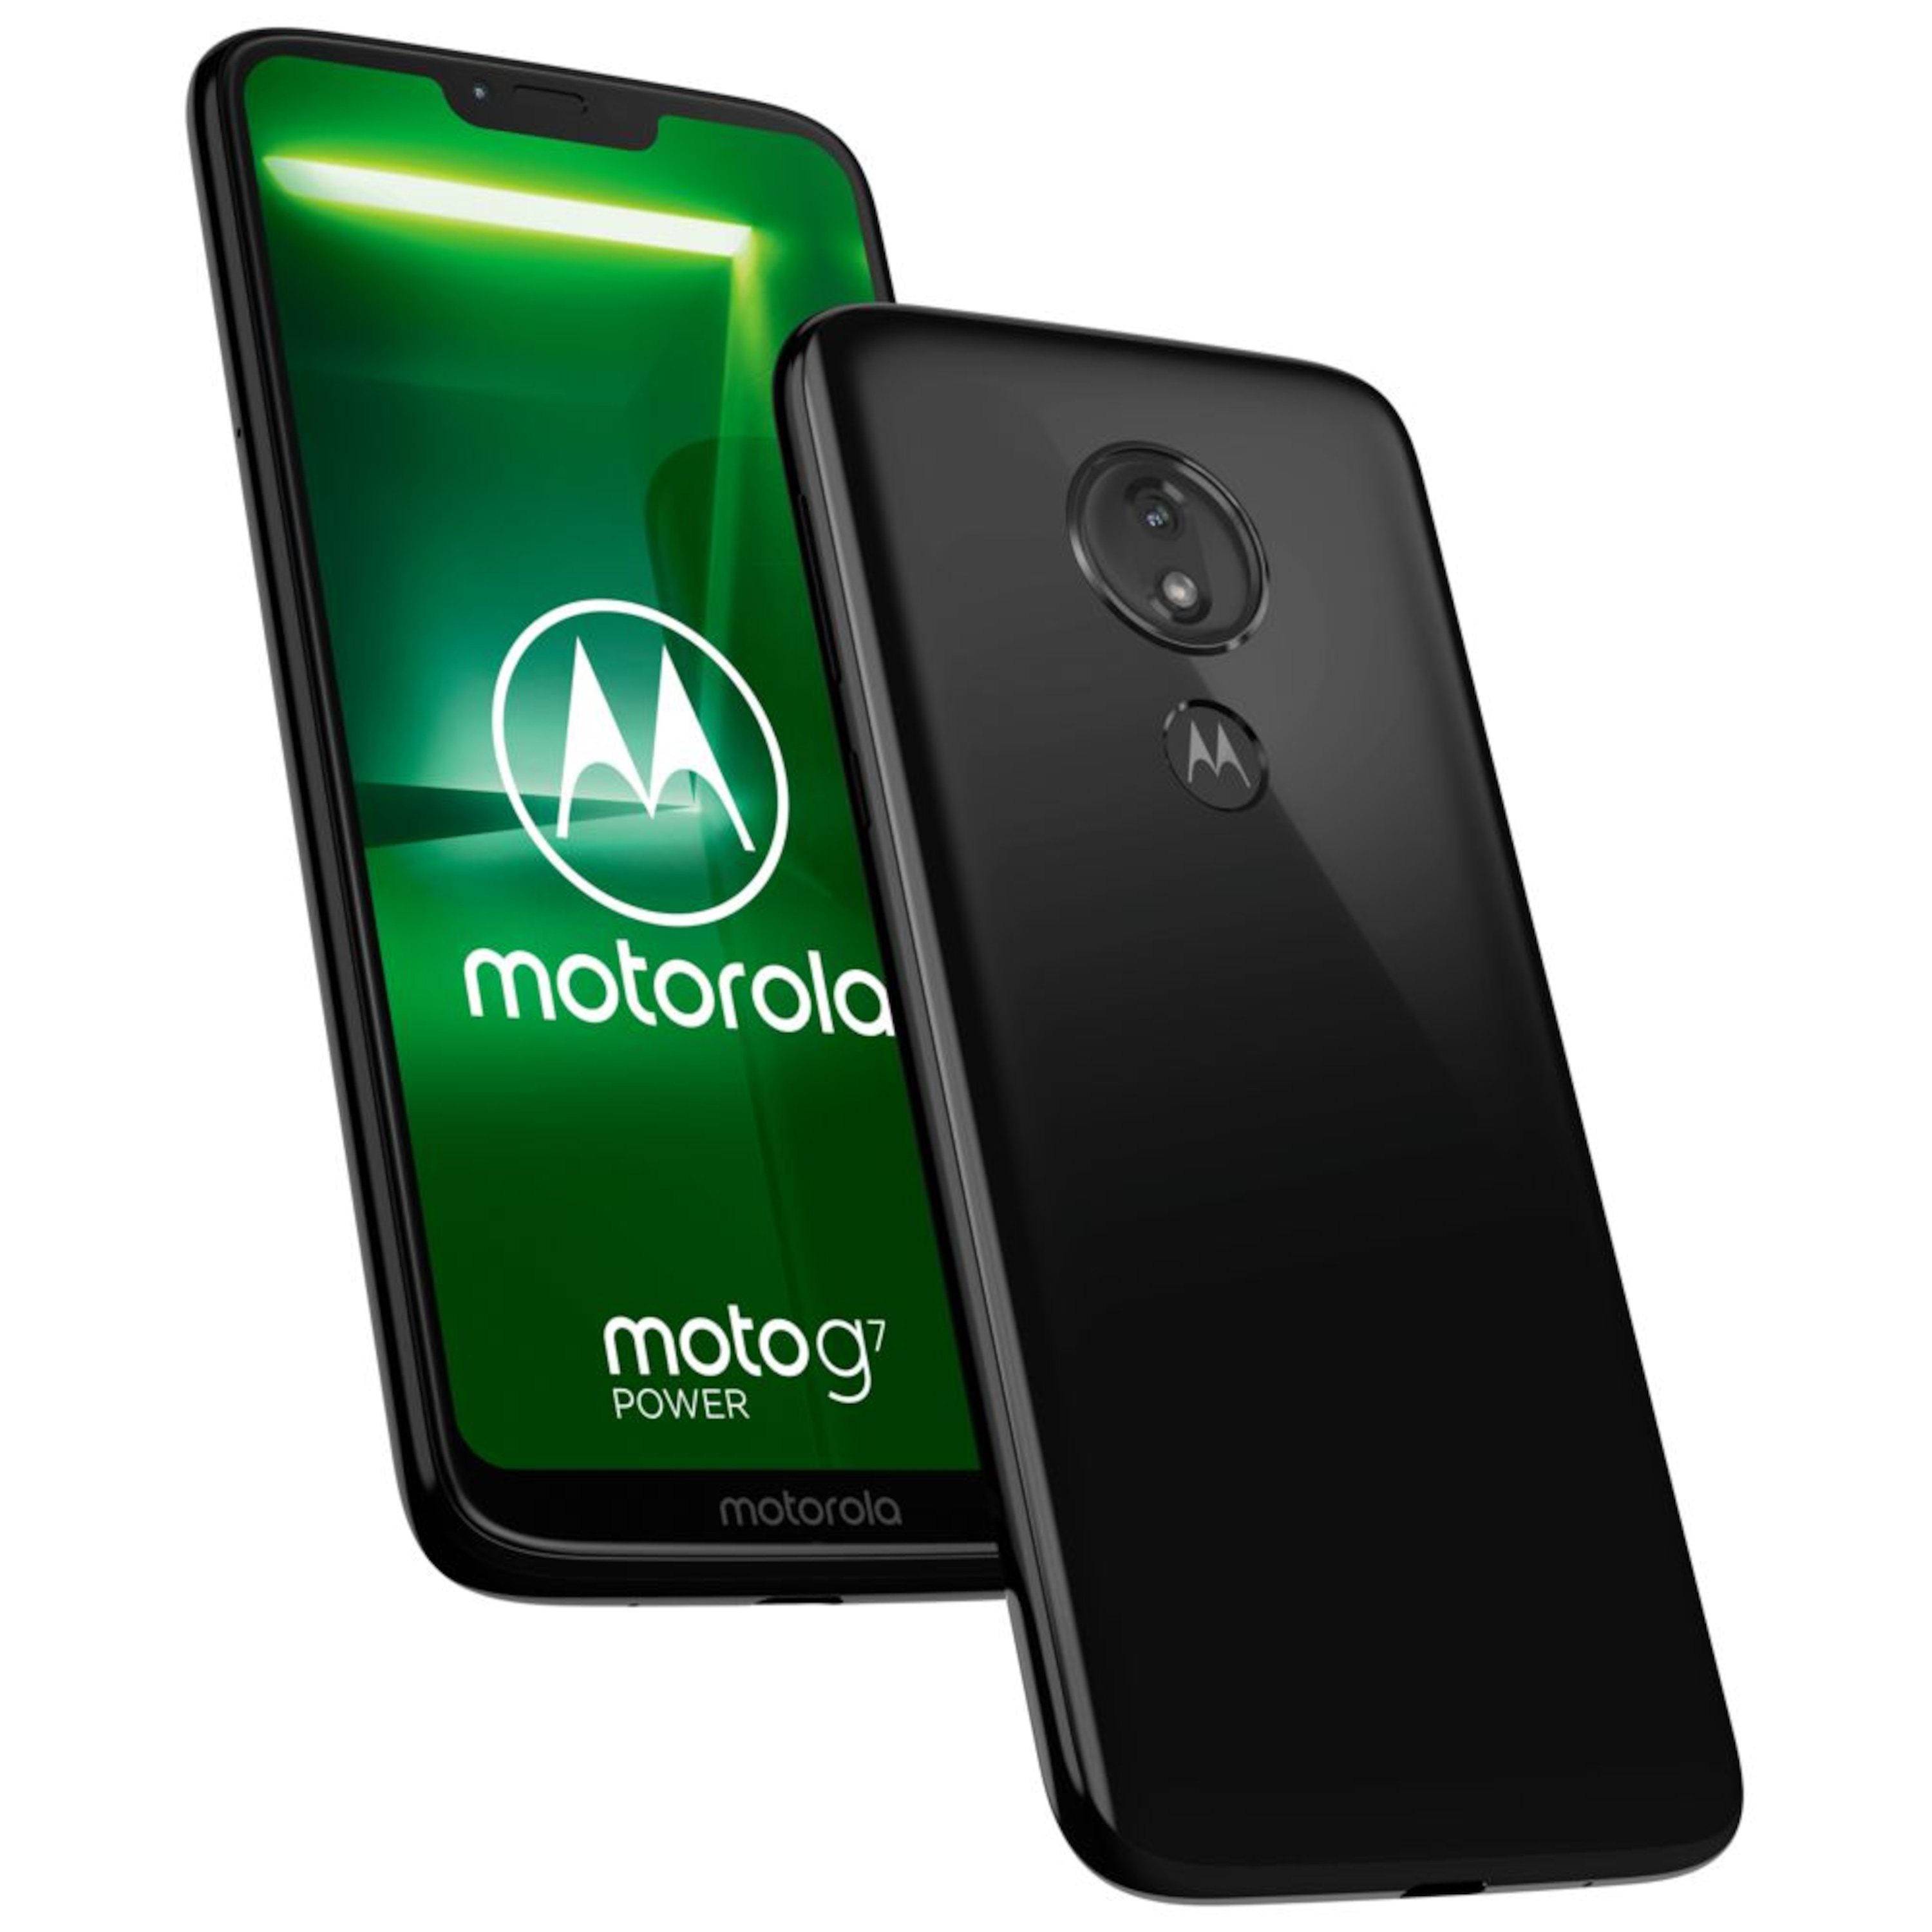 MOTOROLA moto g7 power Smartphone, 15,84 cm (6,2") HD+ Display, Android™ 9.0, 64 GB Speicher, Octa-Core-Prozessor, Dual-SIM, LTE inkl. MOTOROLA Escape Bluetooth® Kopfhörer